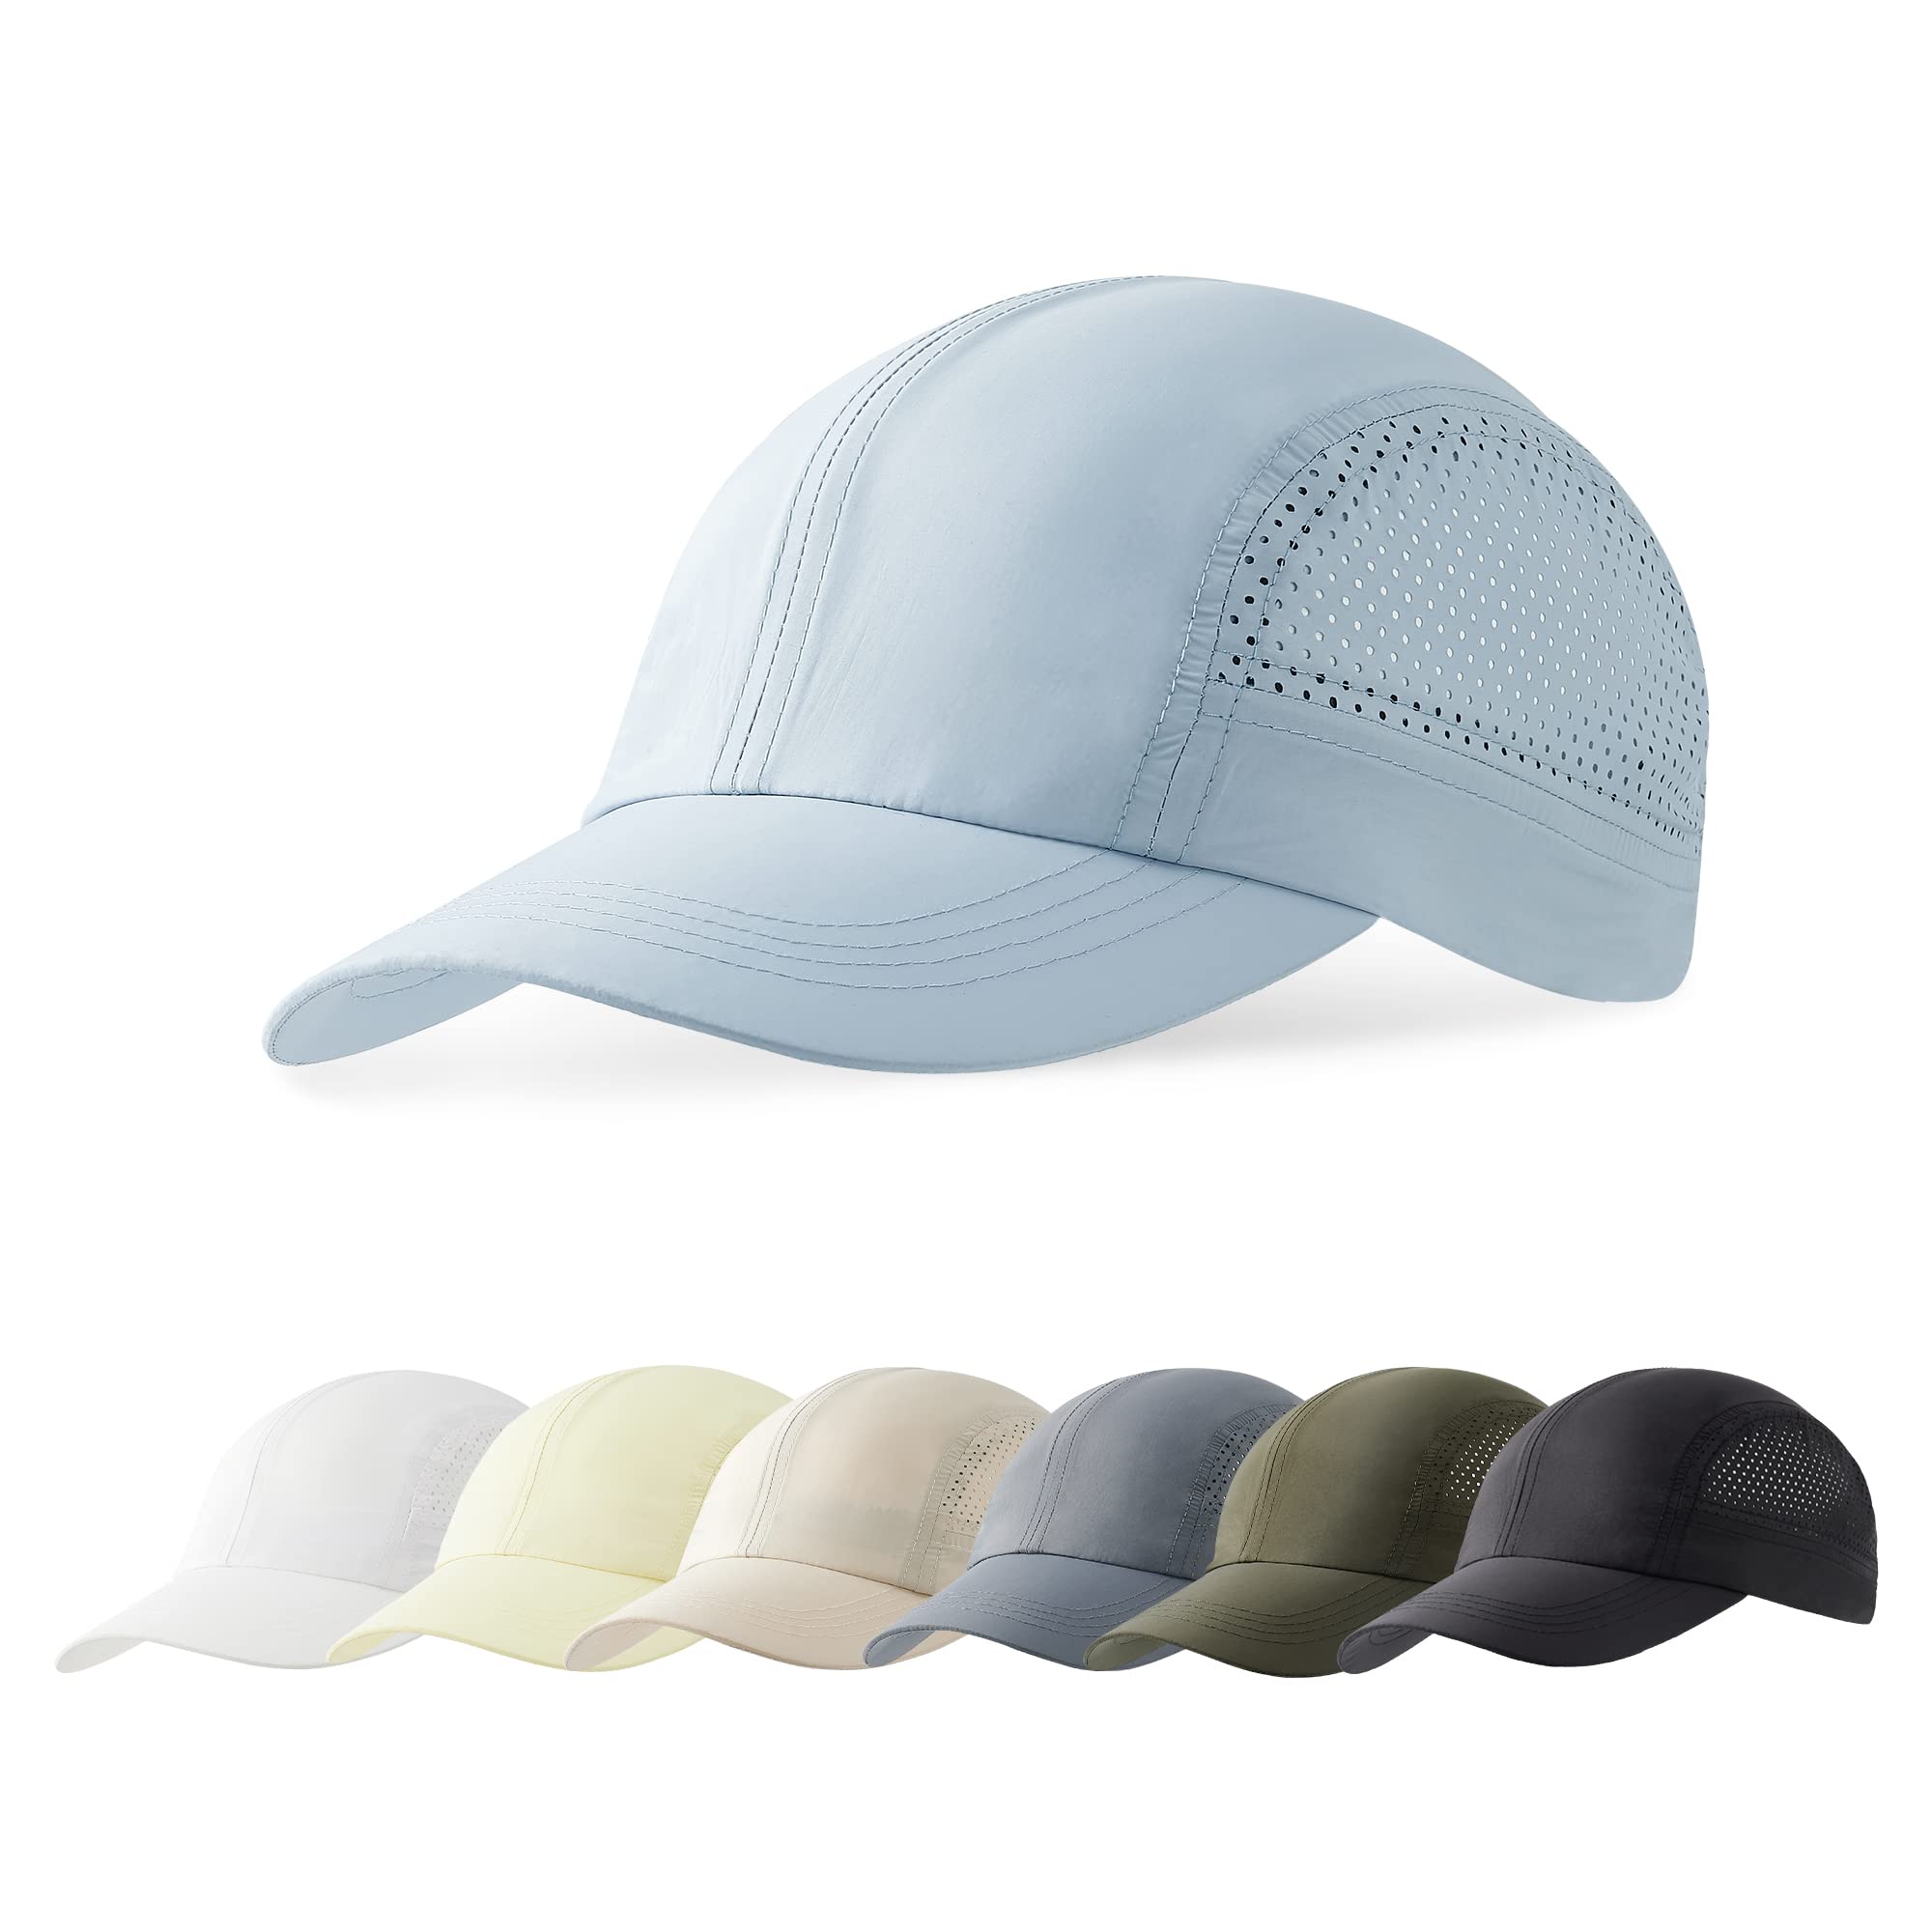 zowya cool Sun Hat Outdoor Sport cap Breathable Quick Drying Waterproof Unstructured Running climbing for Men Women Ligh